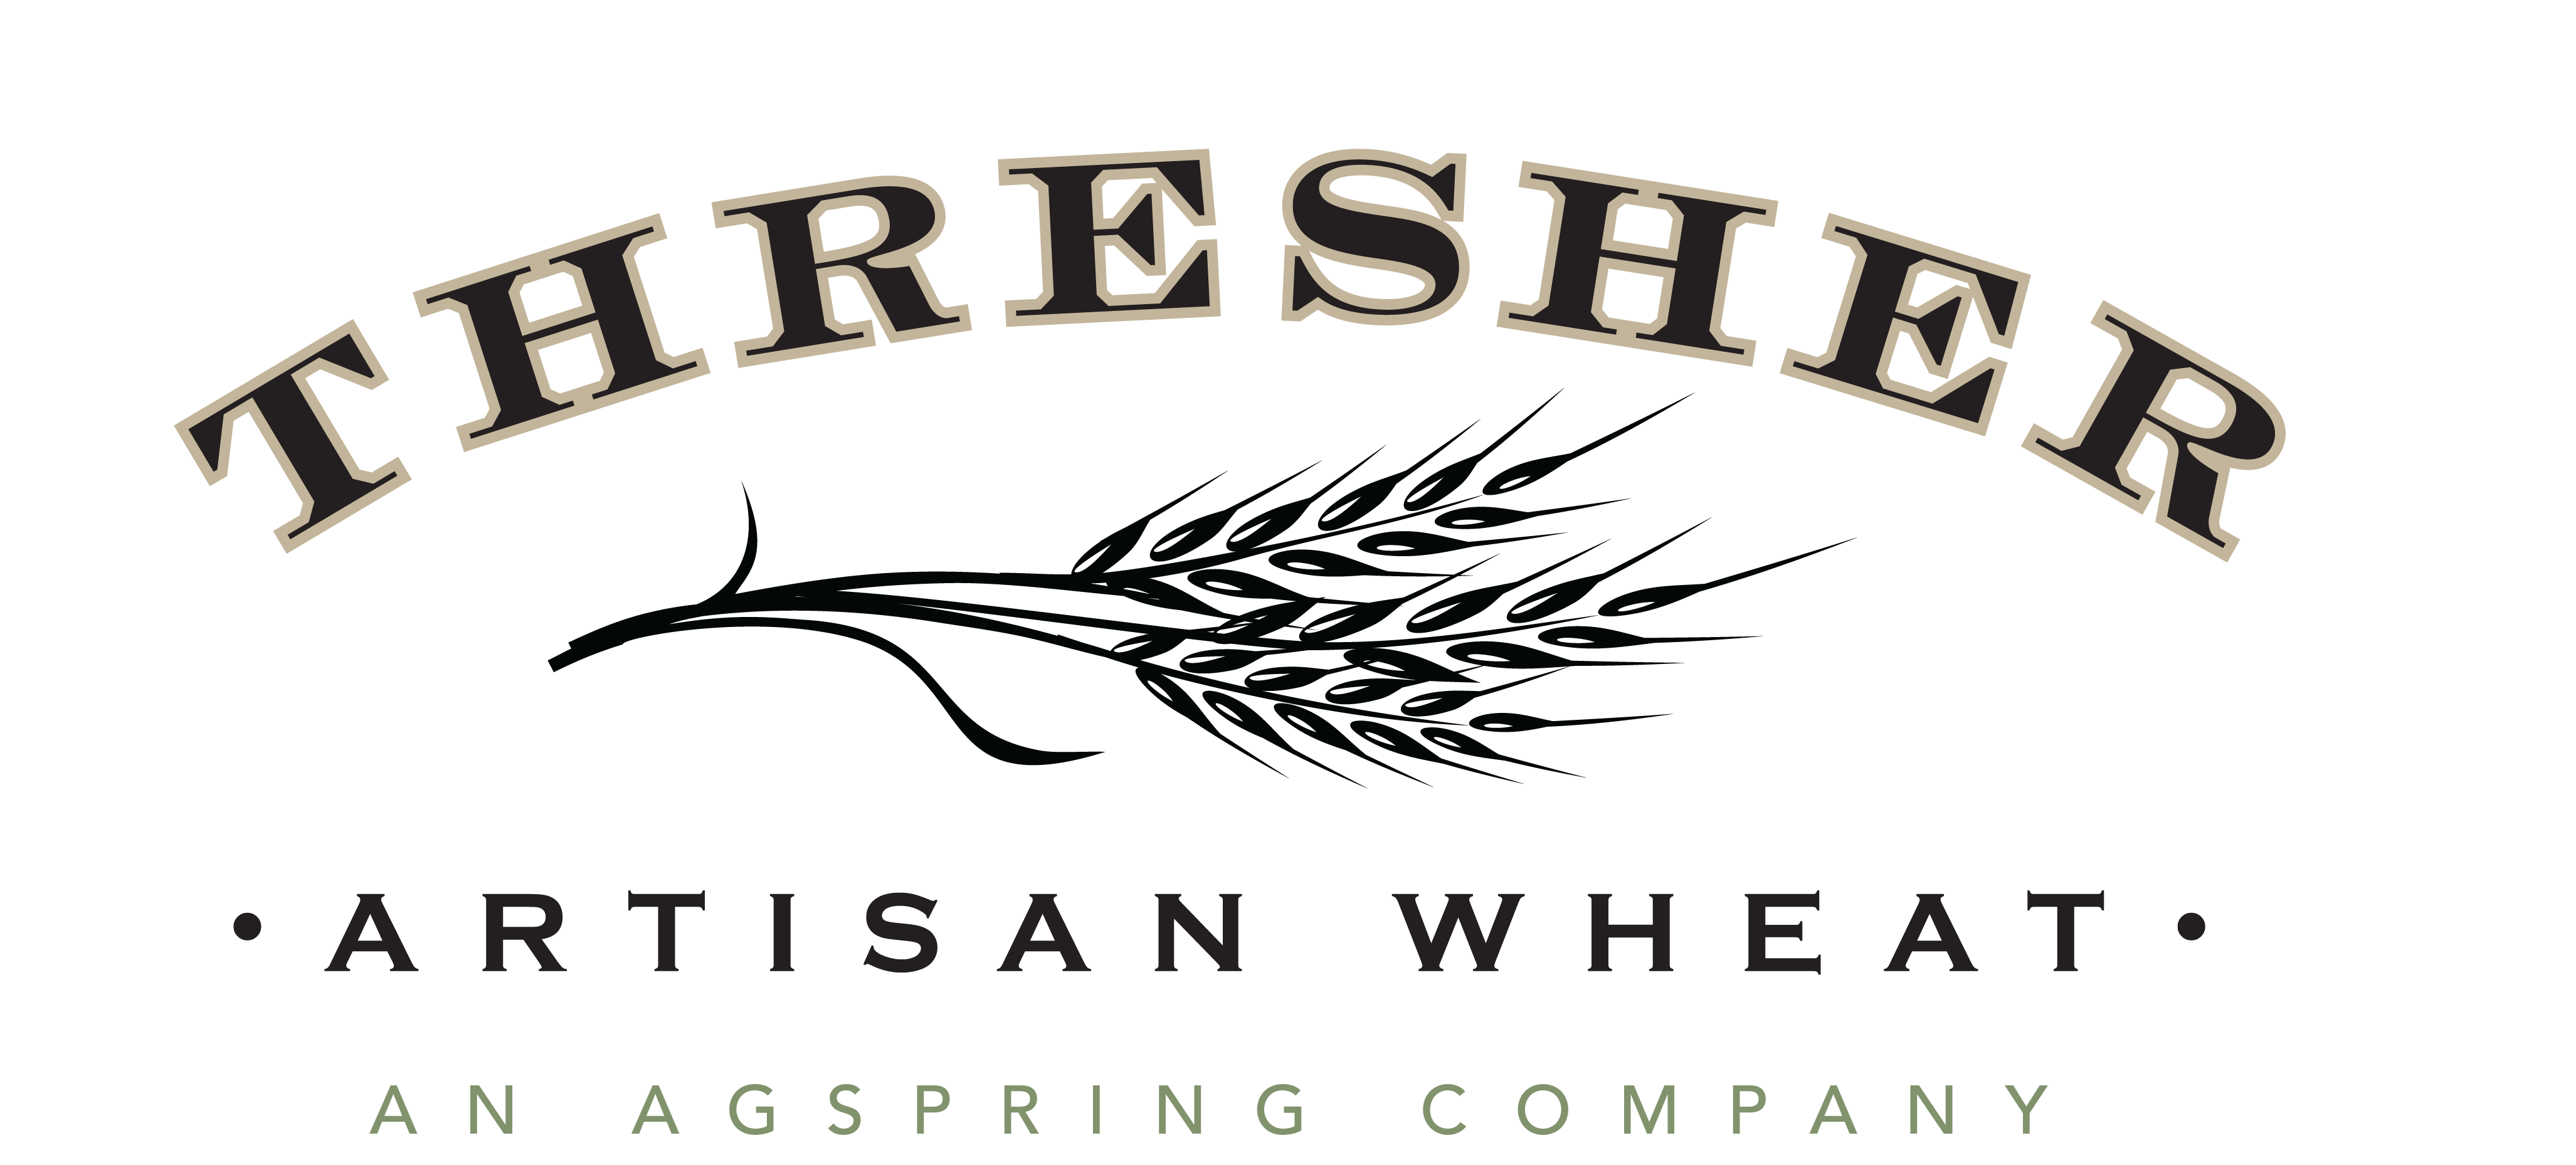 Thresher Artisan Wheat logo